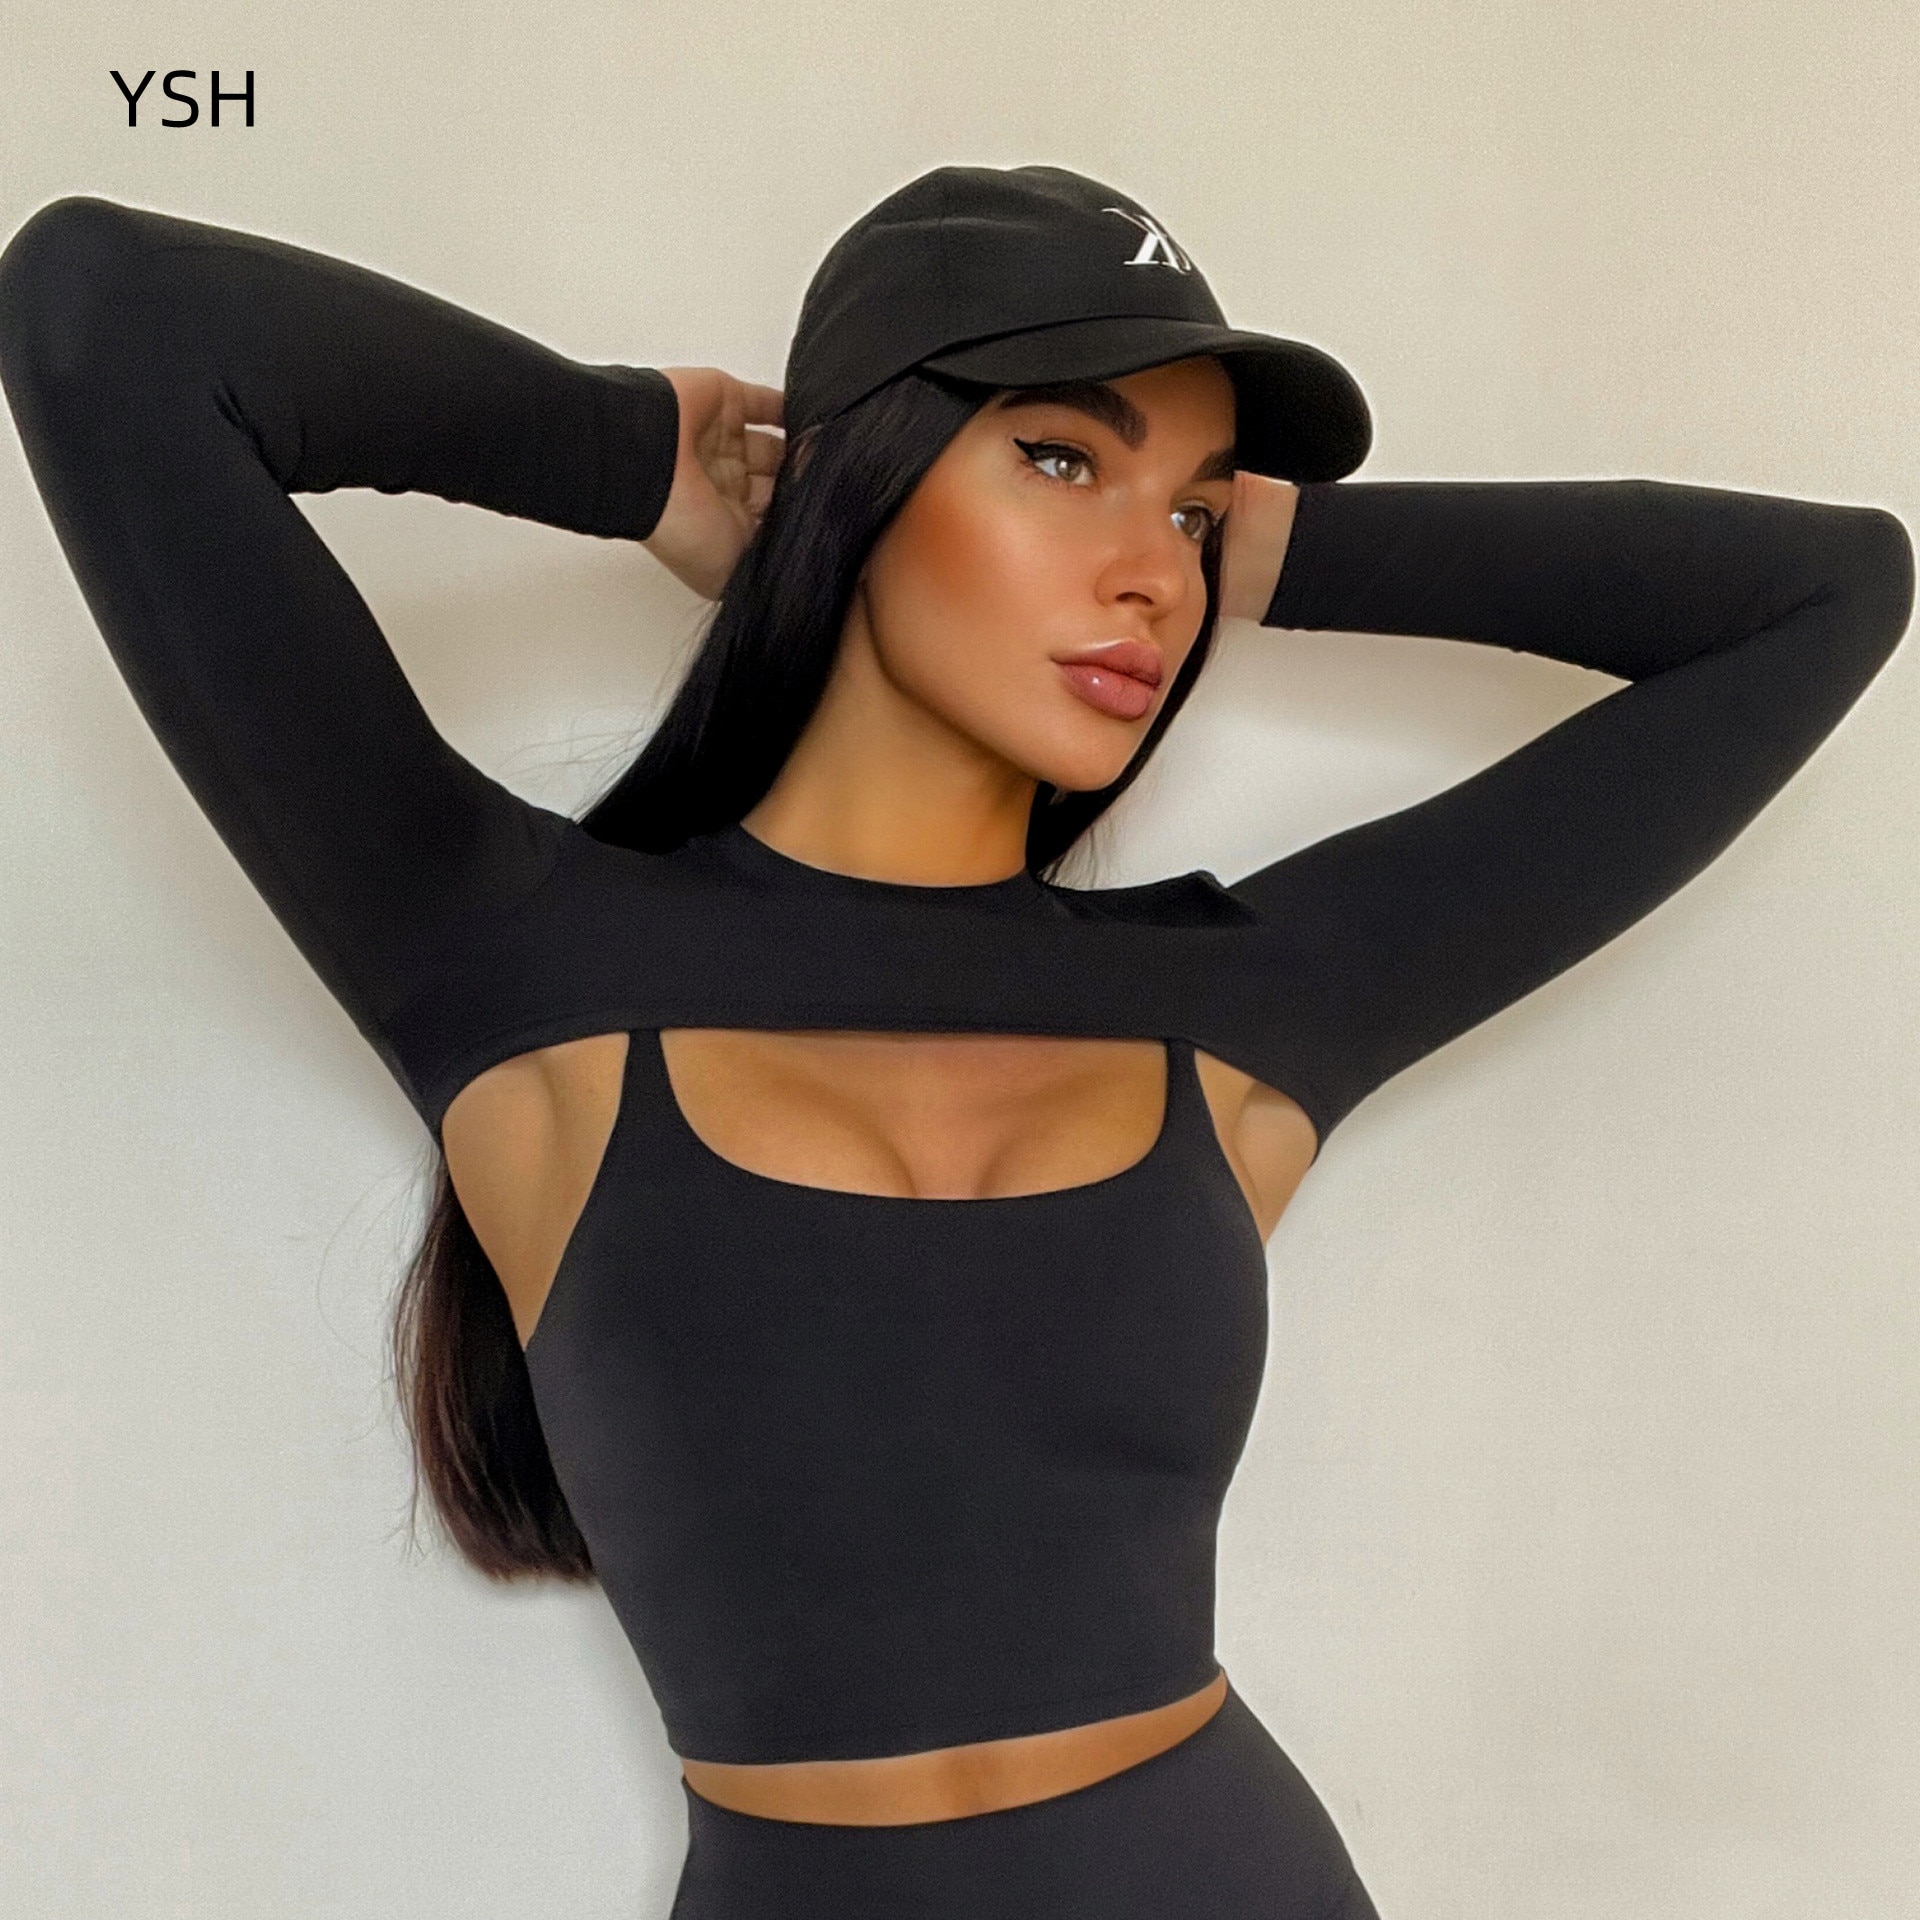 YUSHUHUA Women Long Sleeve Yoga Shirts Fitness Crop Top Running Tight Sports Shawl Quick Dry Workout Clothes